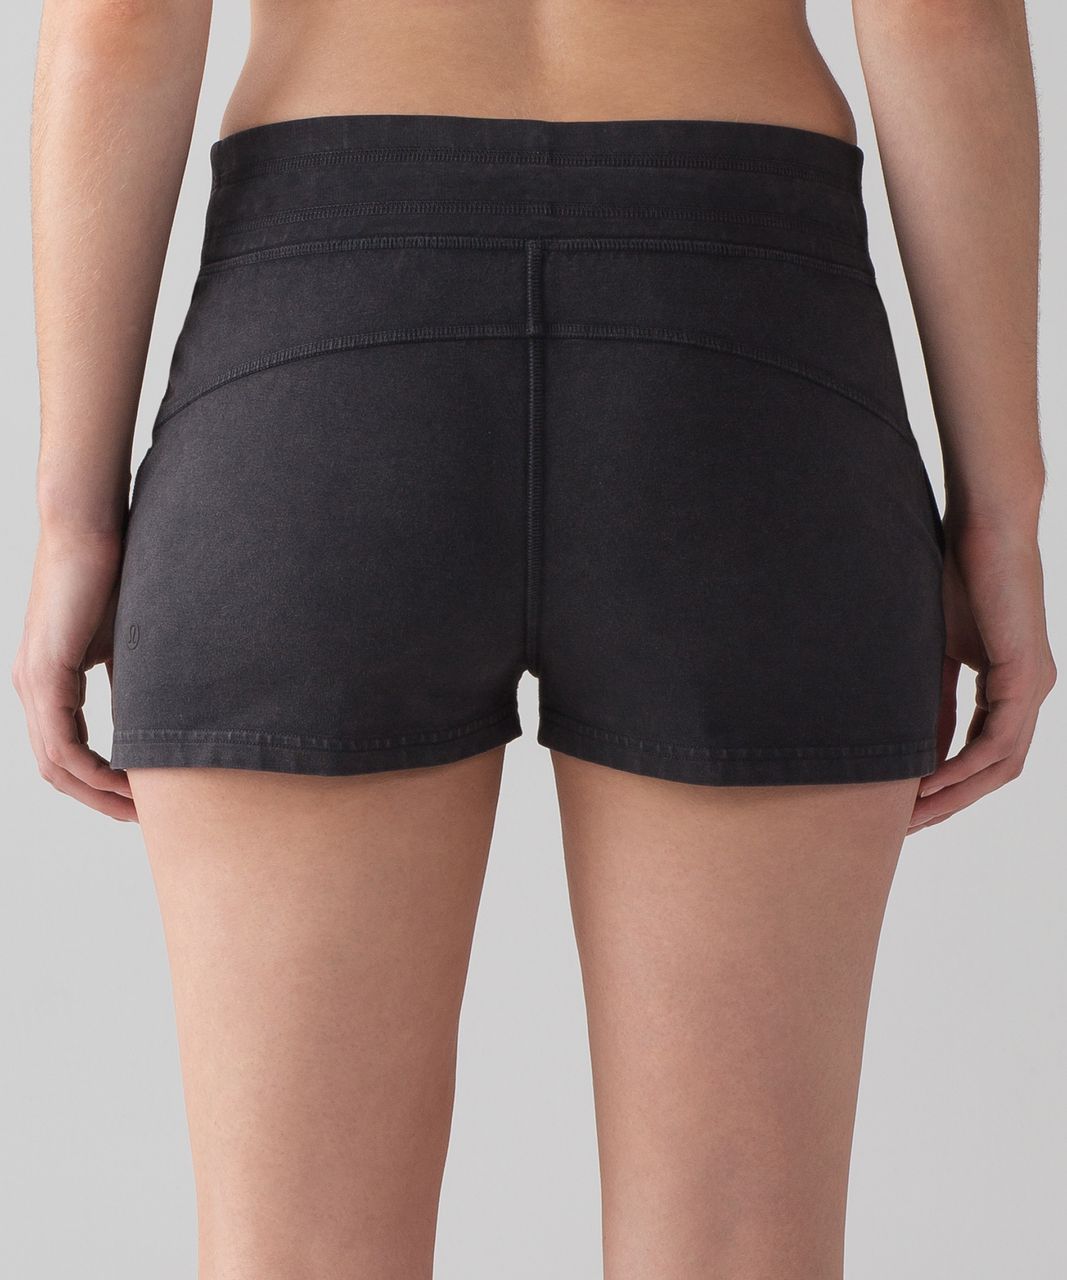 Lululemon Black Booty Shorts Womens Size 8 - $31 - From Anita